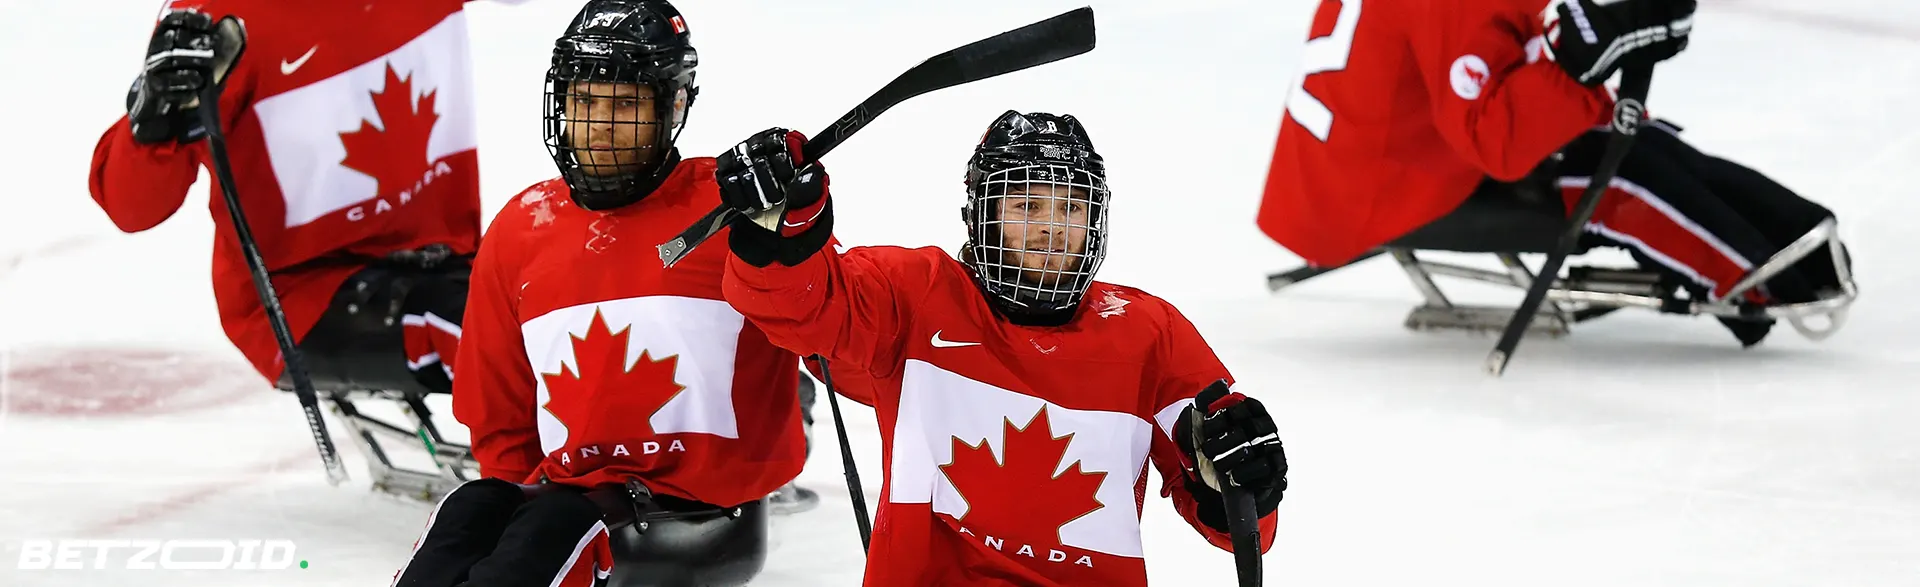 New Brunswick sledge hockey players in action, symbolizing New Brunswick sportsbooks.